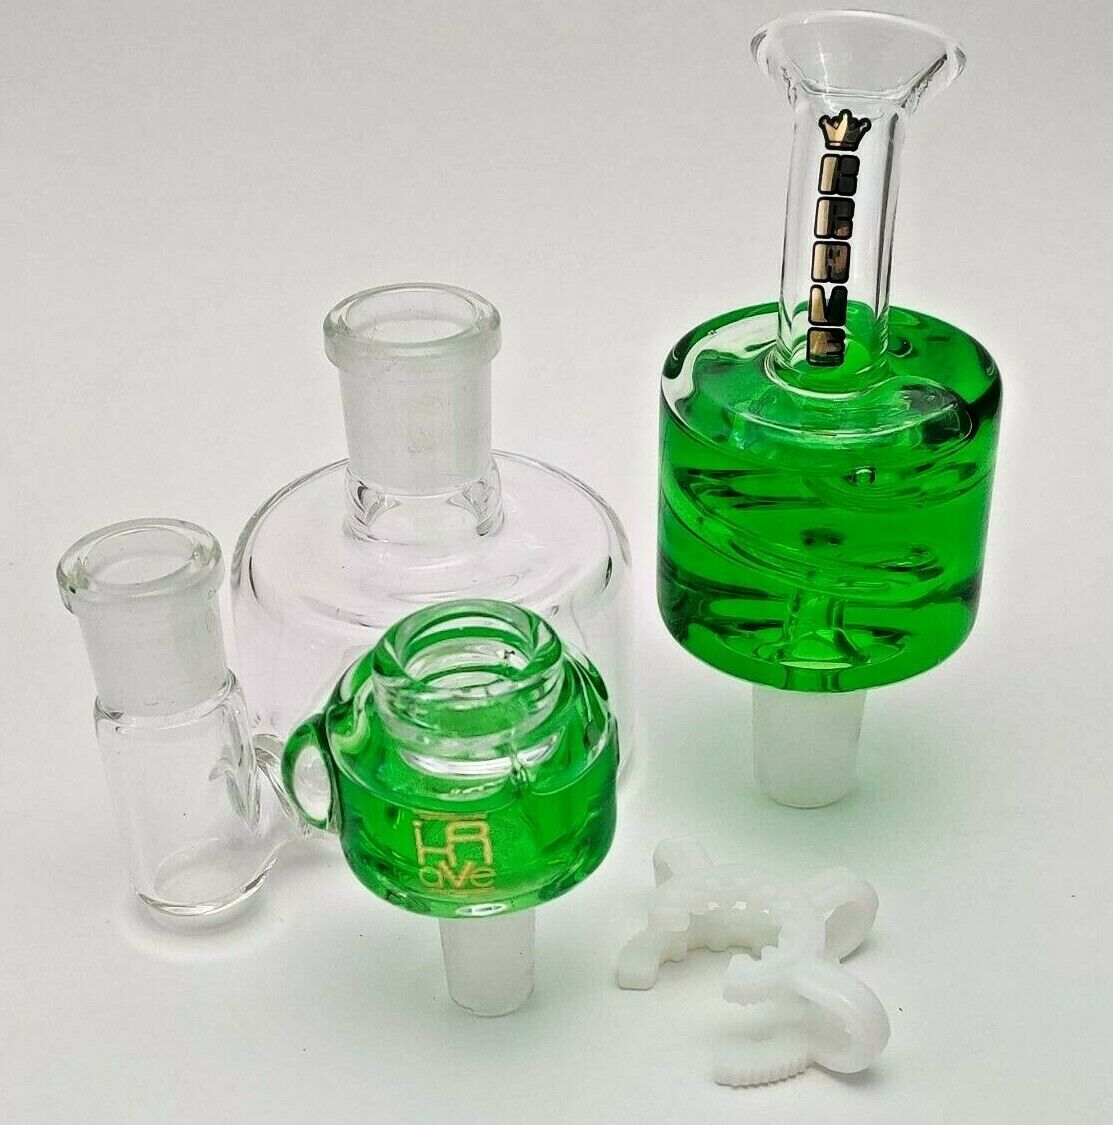 China Green 7″ freezable modular glass bong hookah water pipe tobacco bongs  Manufacturer and Supplier